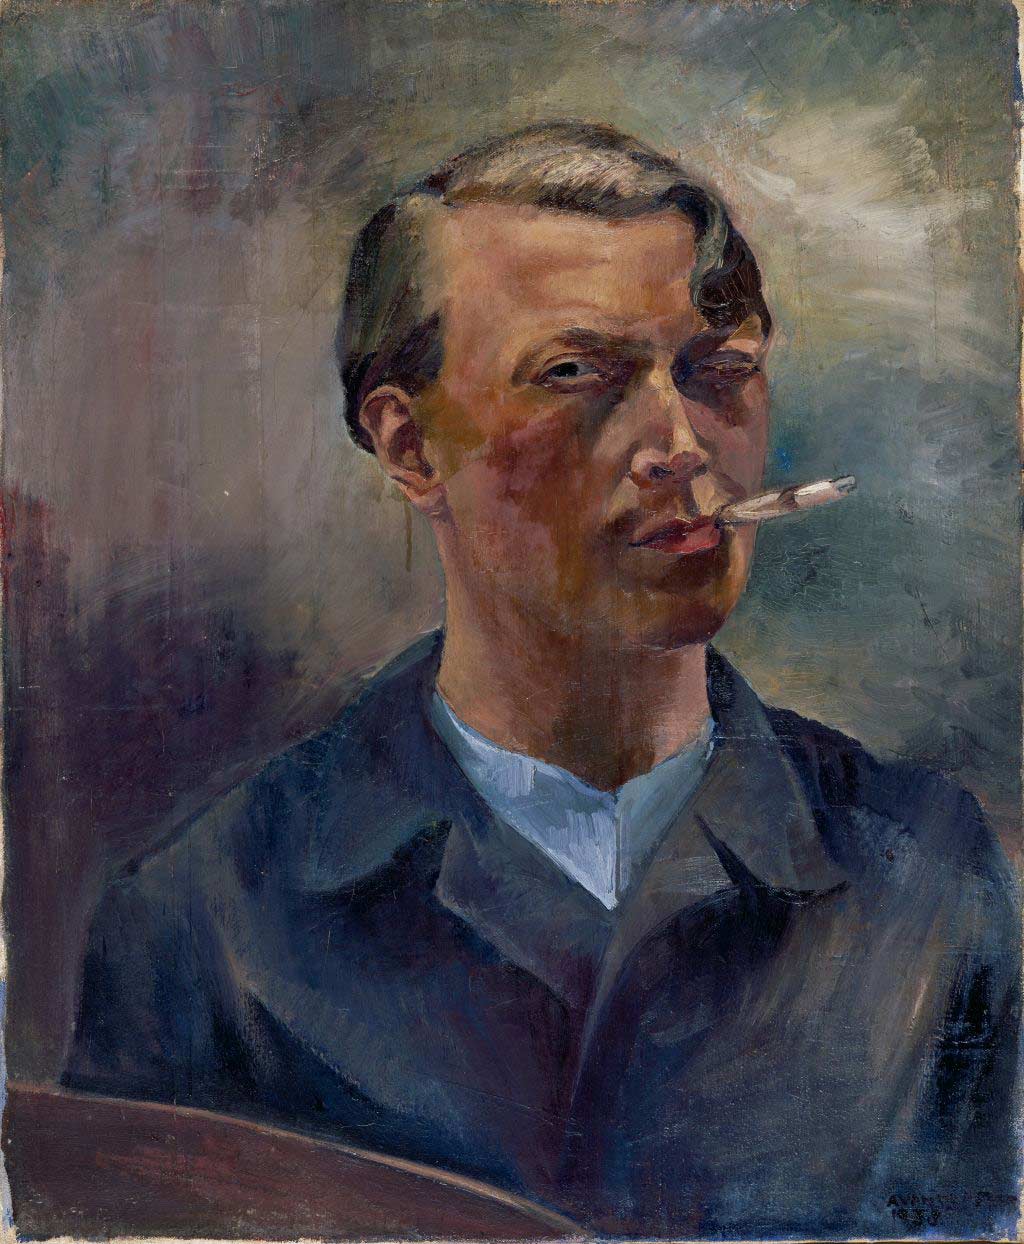 Fig. 3: Anneke van der Feer, Self portrait, 1938, 75.7 x 63 x 4.1 cm, Stedelijk Museum Amsterdam.